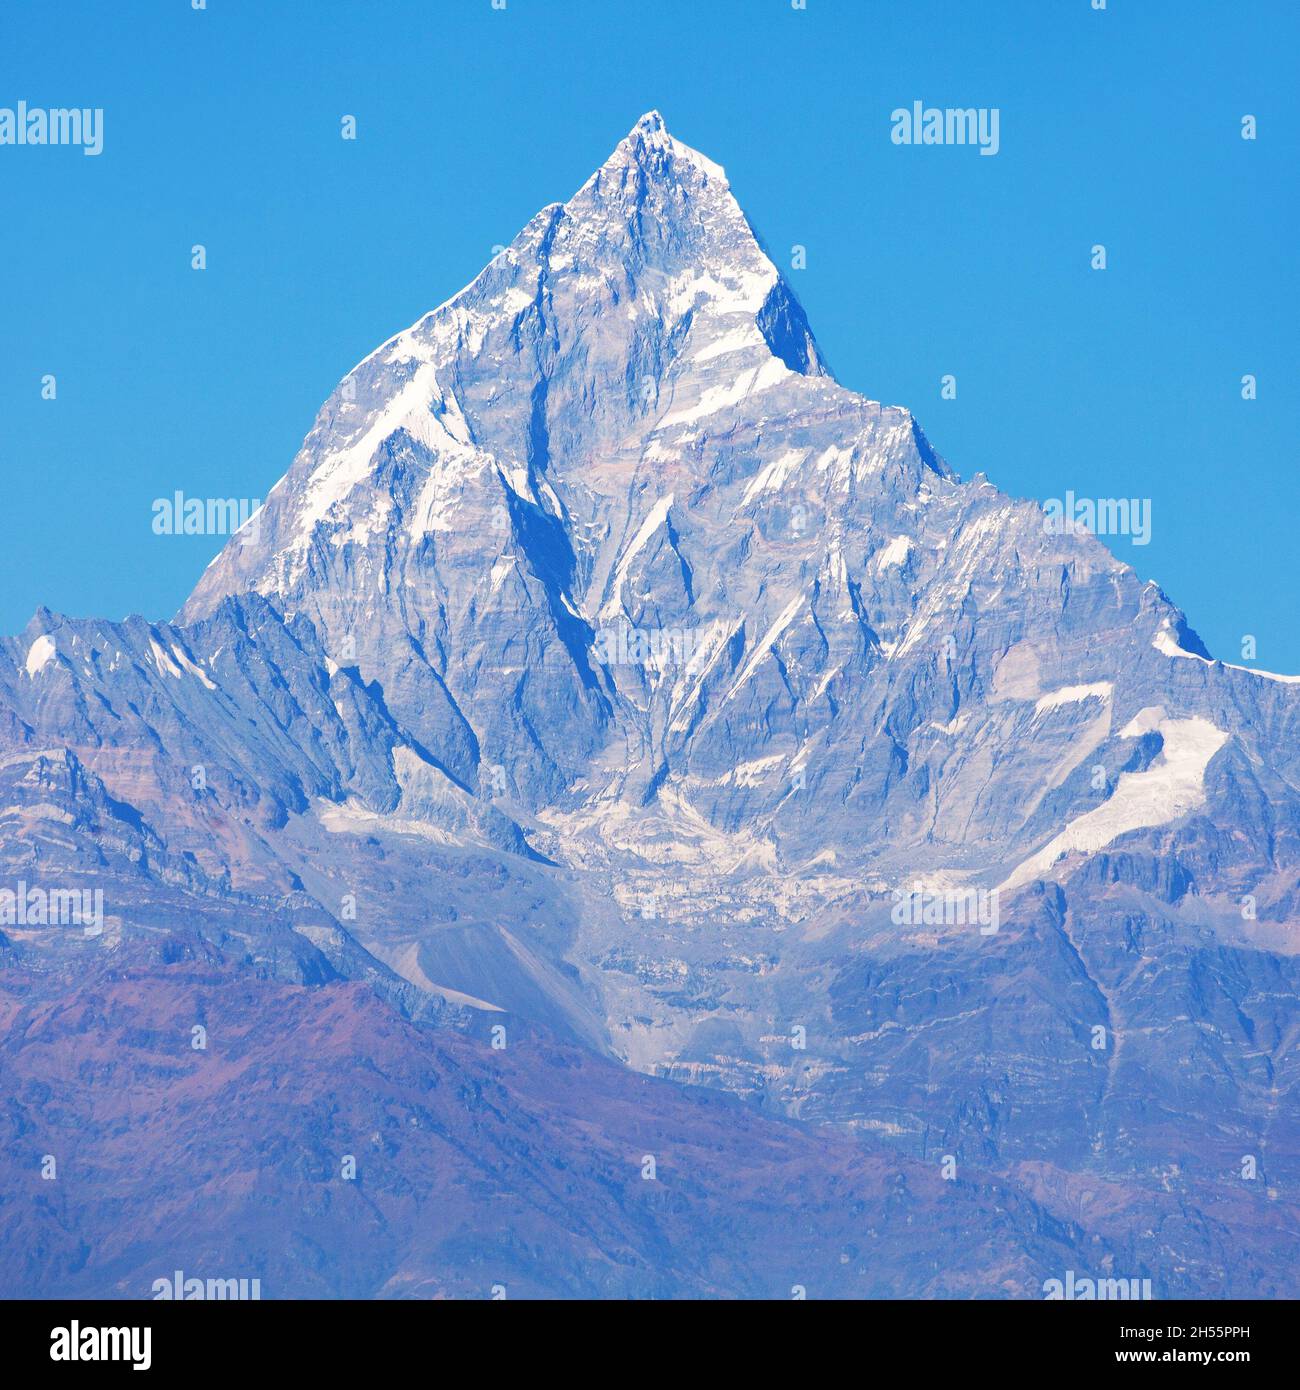 Vista di colore blu del monte Machhapuchhre, zona di Annapurna, Nepal himalaya montagne Foto Stock